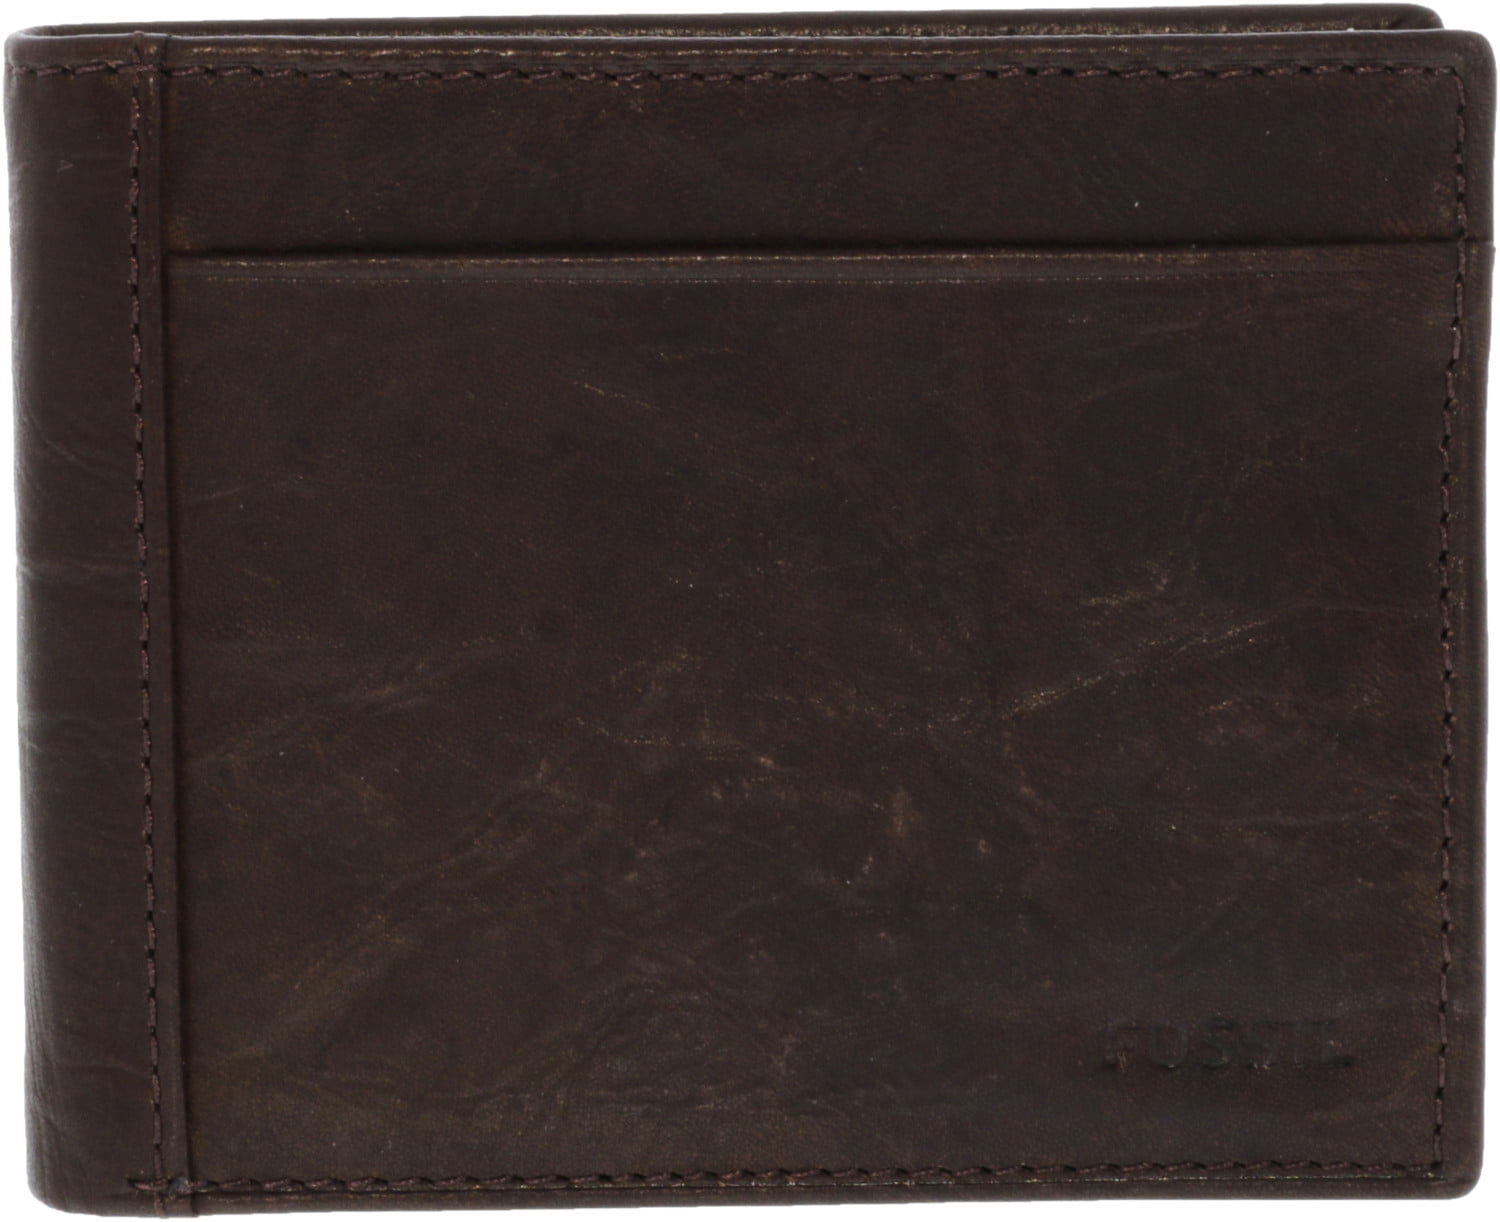 Fossil Men's Quinn Genuine Leather Wallet Flip ID Bifold Card Case 